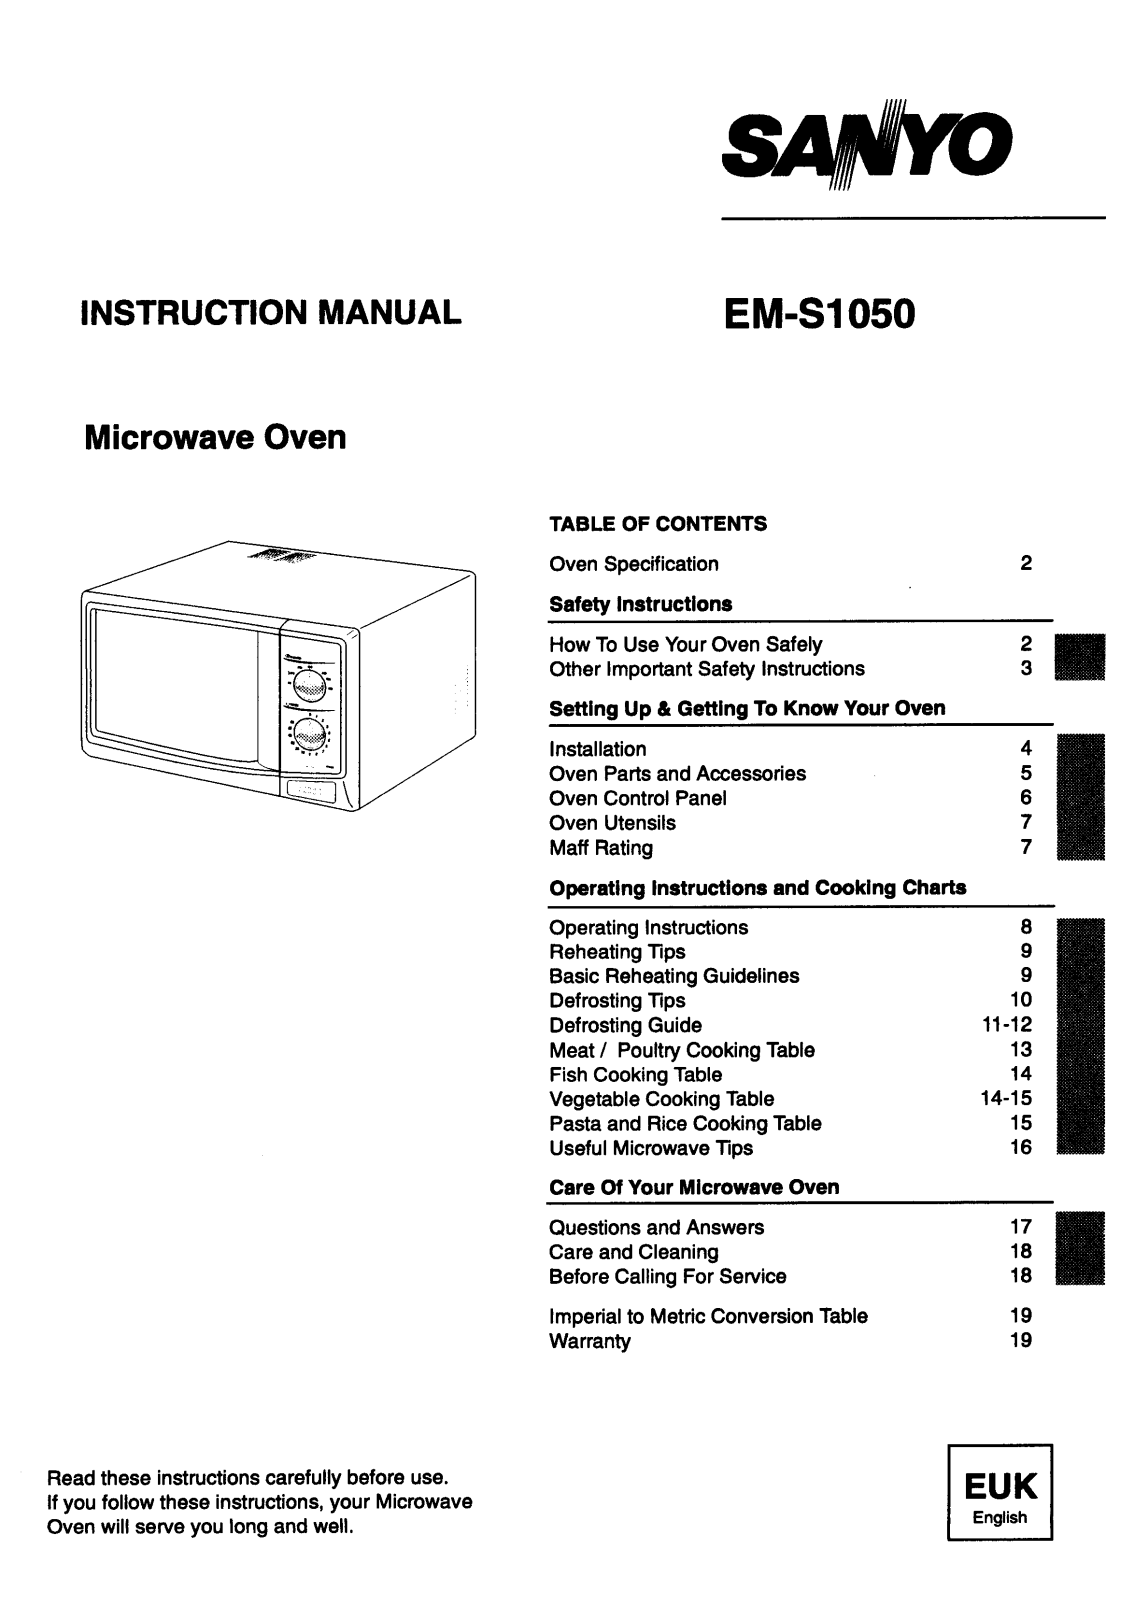 Sanyo EM-S1050 Instruction Manual